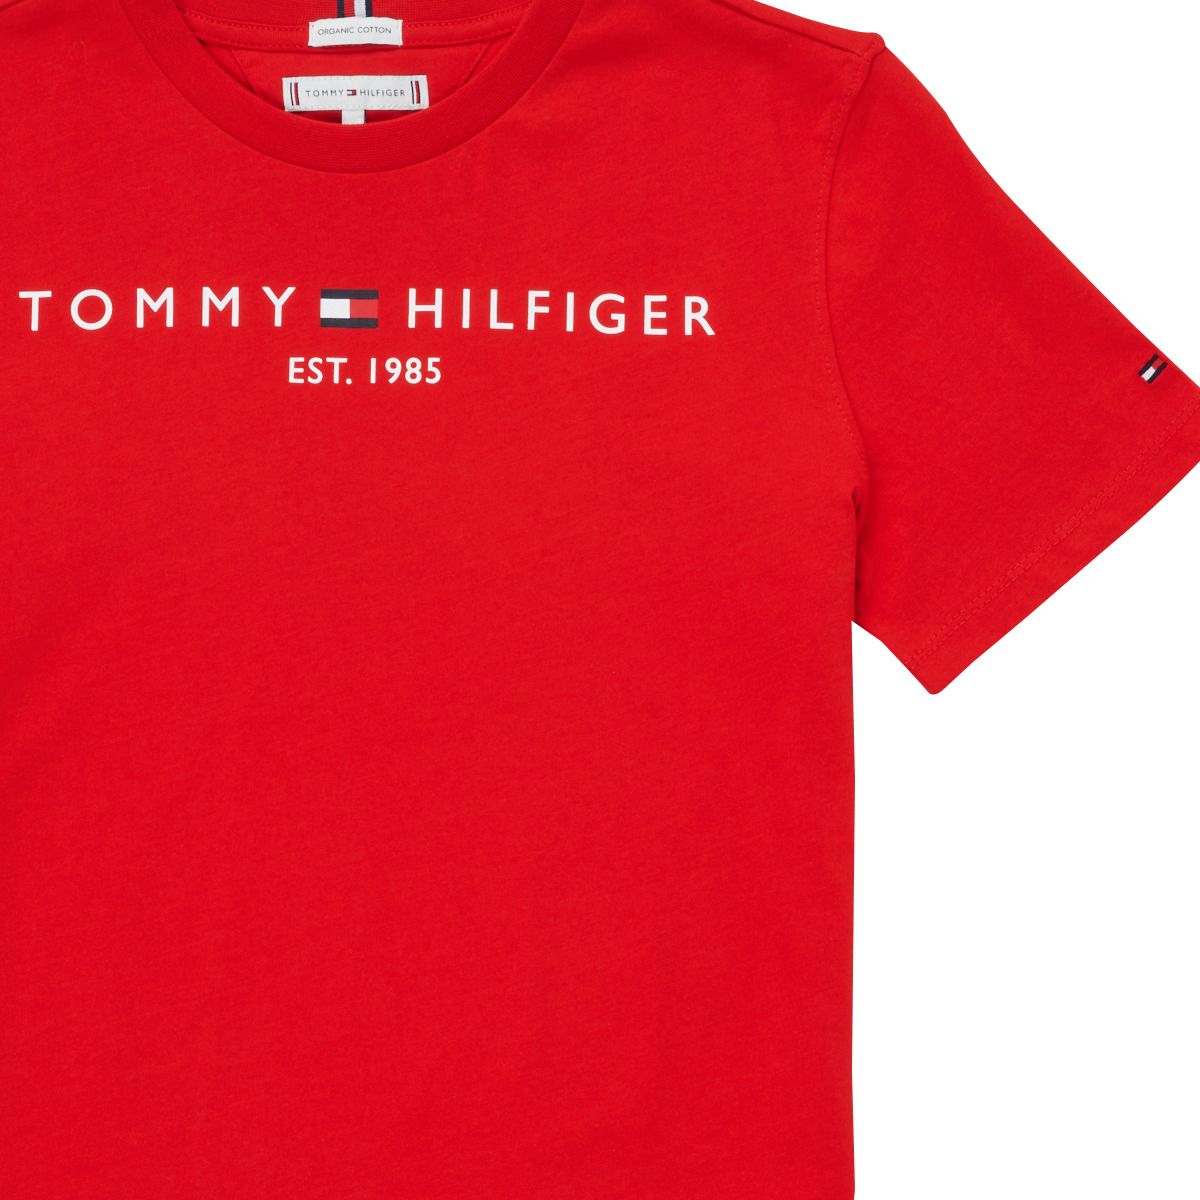 Tommy Hilfiger Rouge SELINERA qicHd7iY